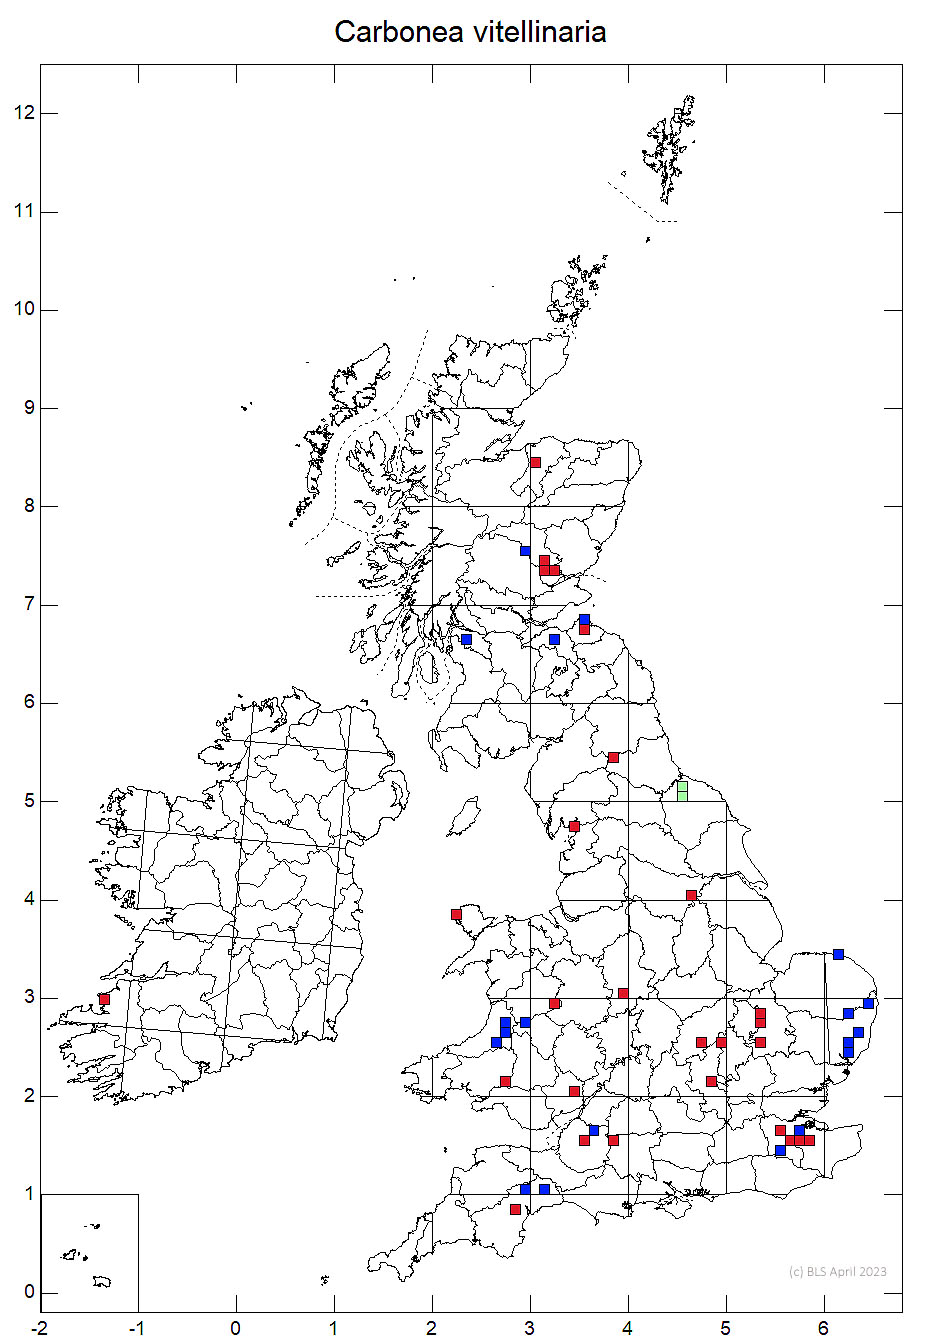 Carbonea vitellinaria 10km sq distribution map